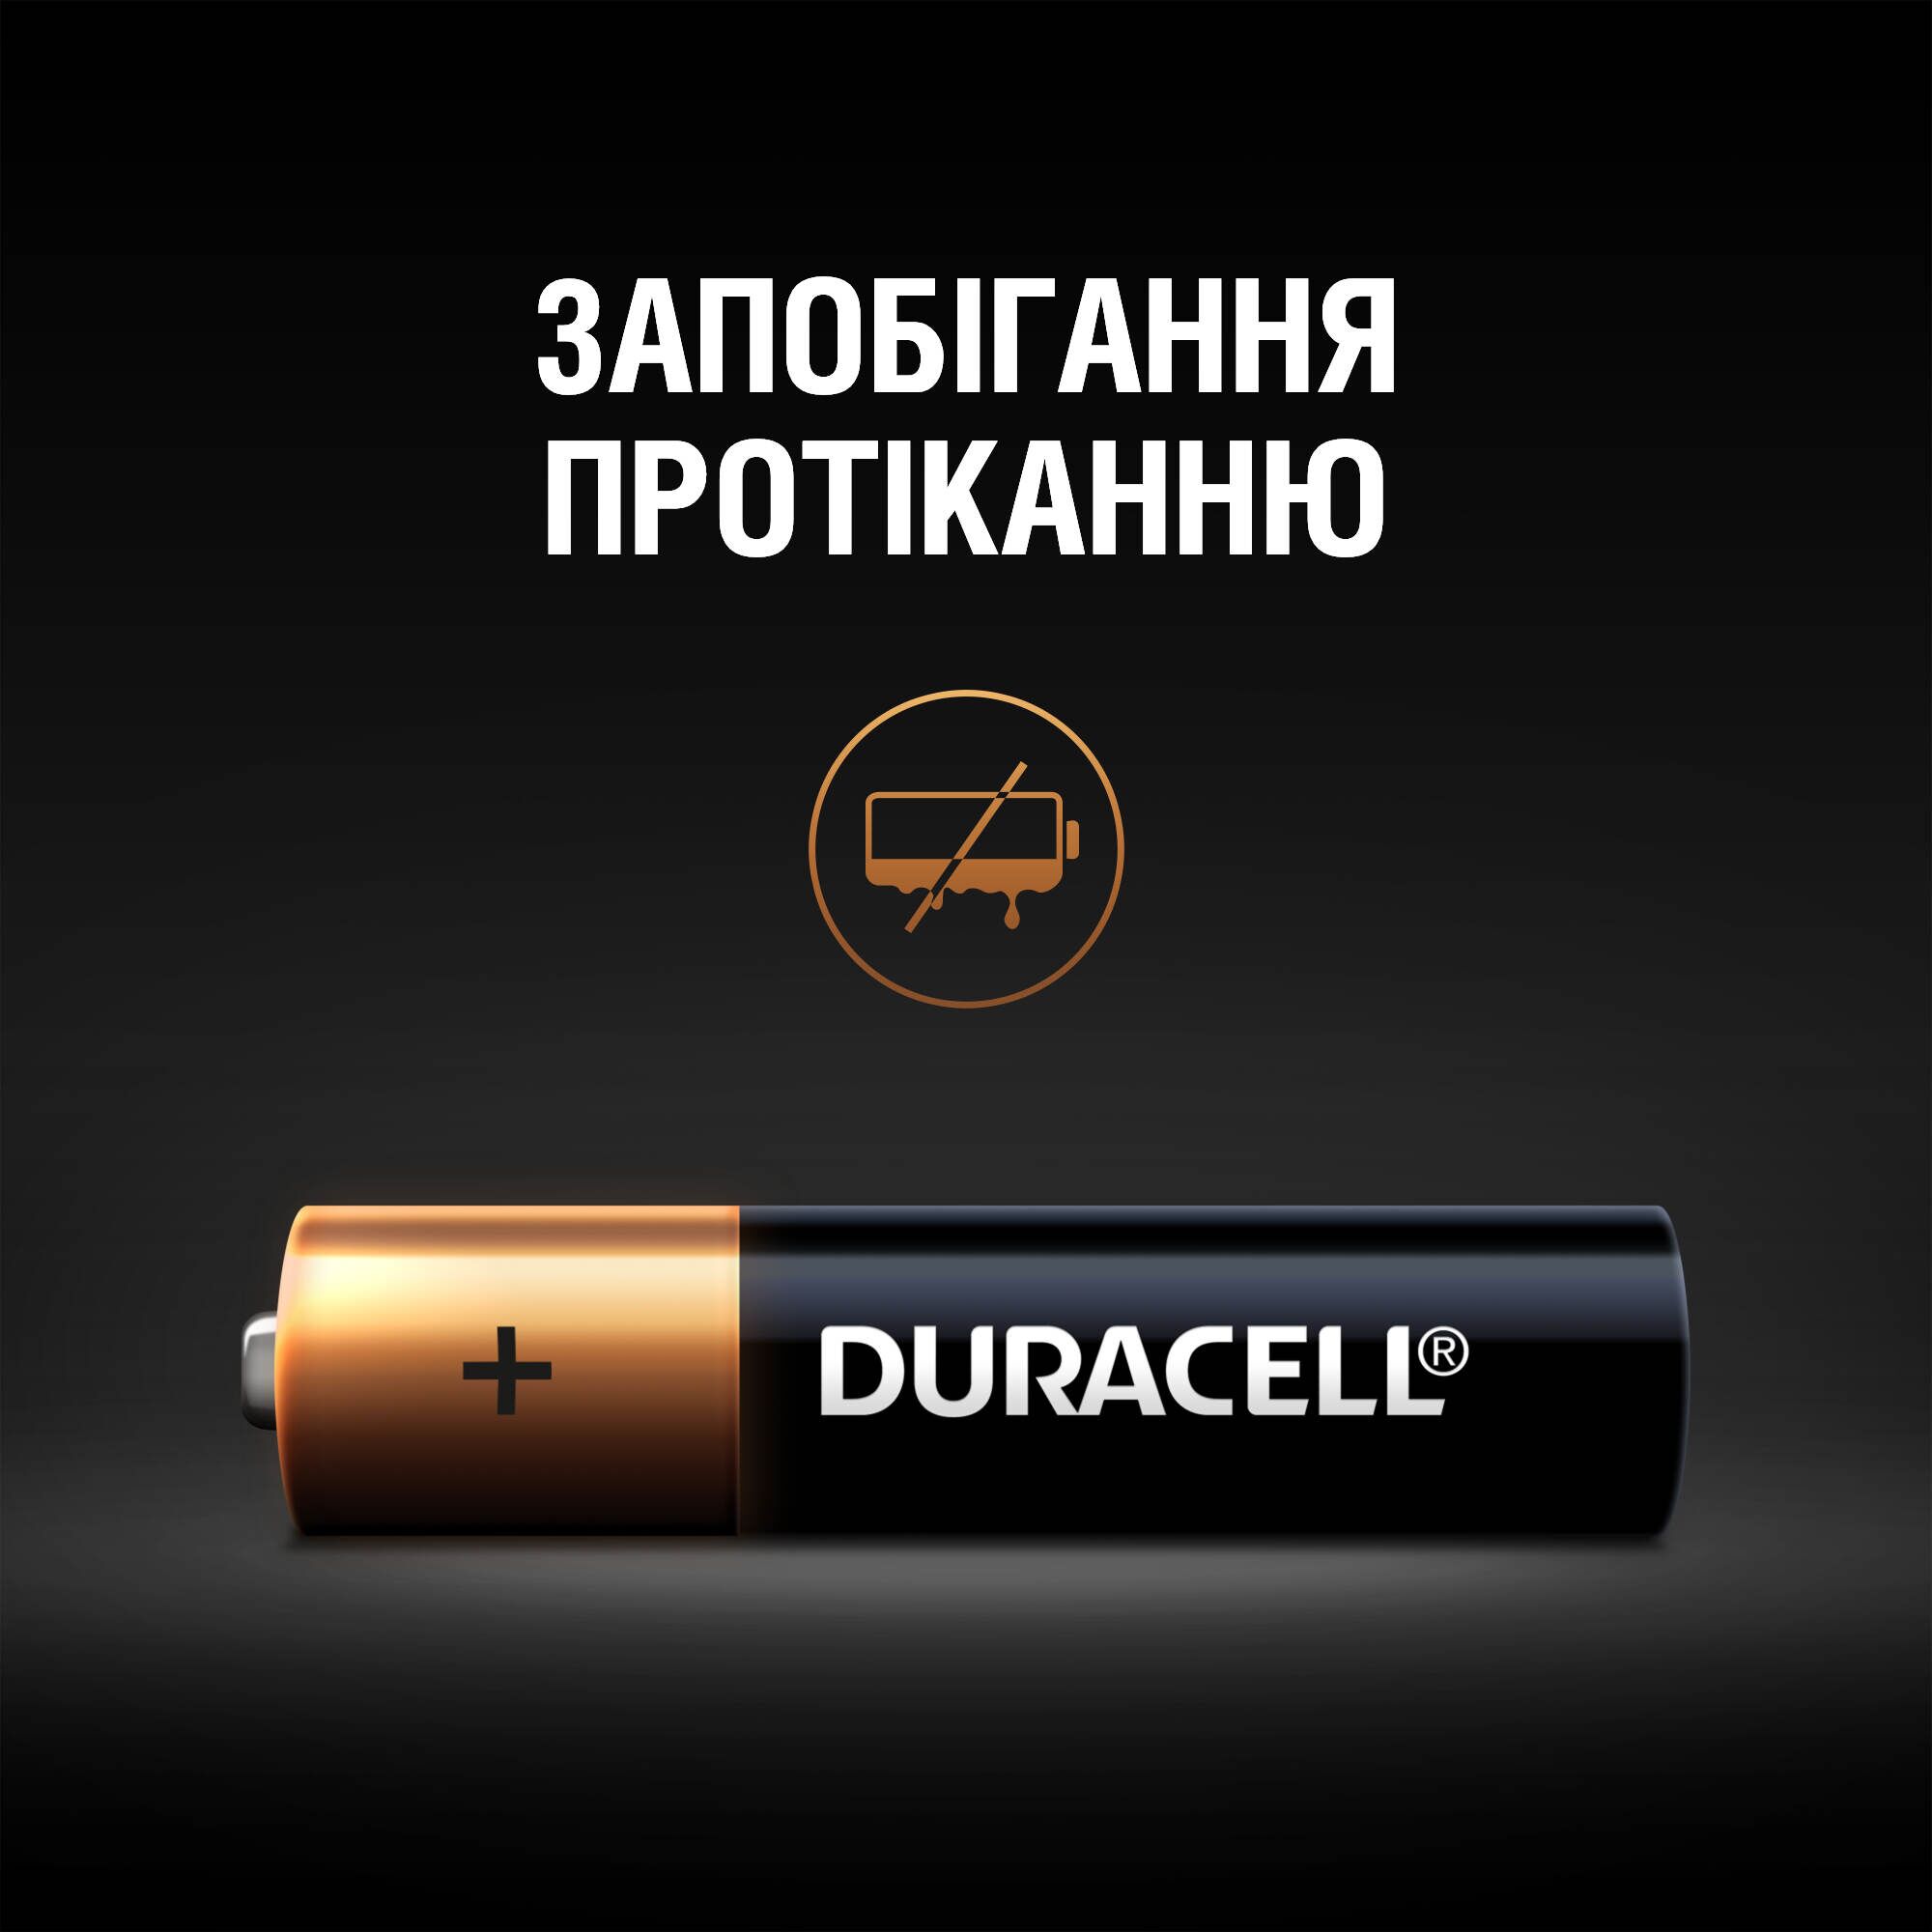 Щелочные батарейки мизинчиковые Duracell 1.5 V AAA LR03/MN2400, 10 шт. (5000394152557) - фото 6